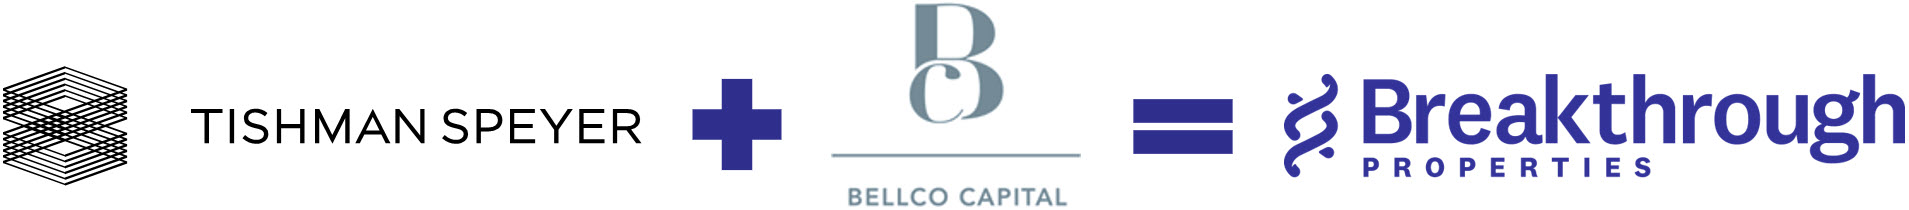 Logos for Tishman Speyer, Bellco Capital, and Breakthrough Properties